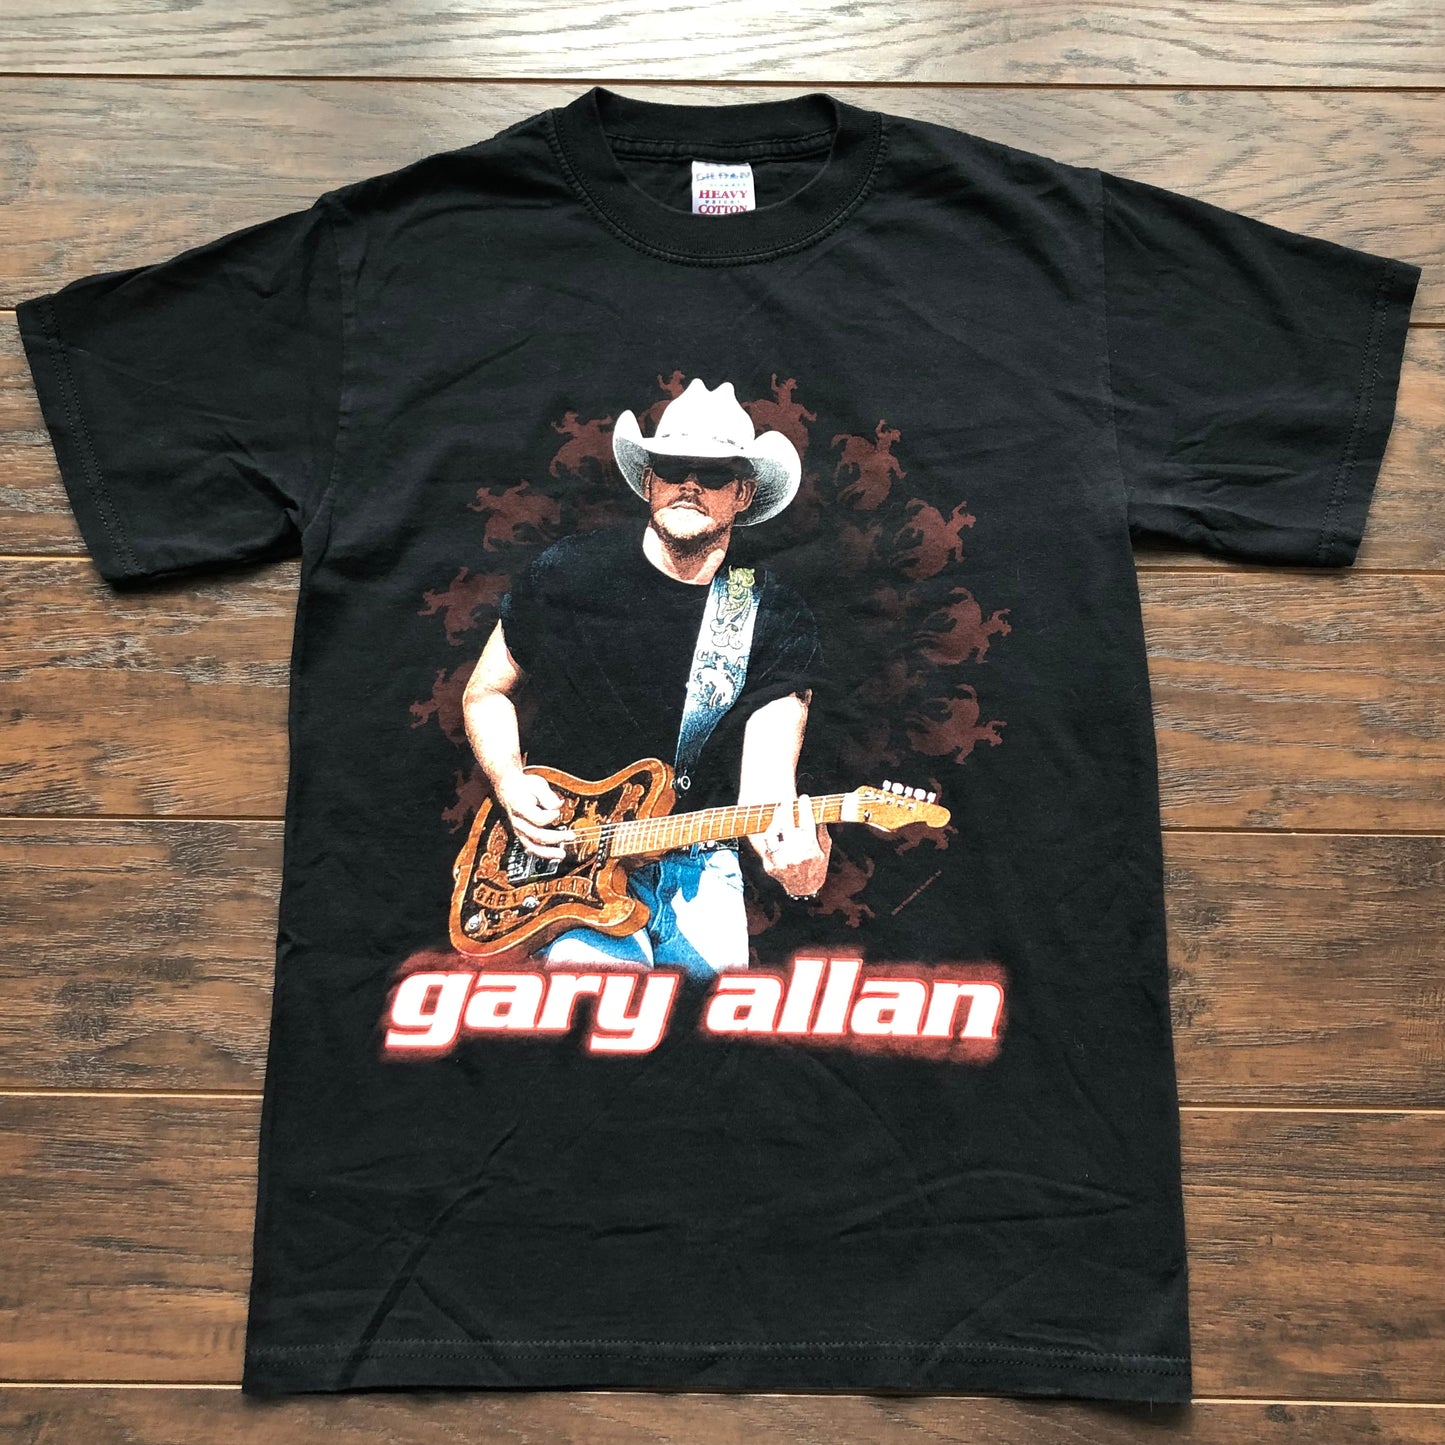 2001 Vintage Western Gary Allan “Man To Man” Country Concert T-Shirt